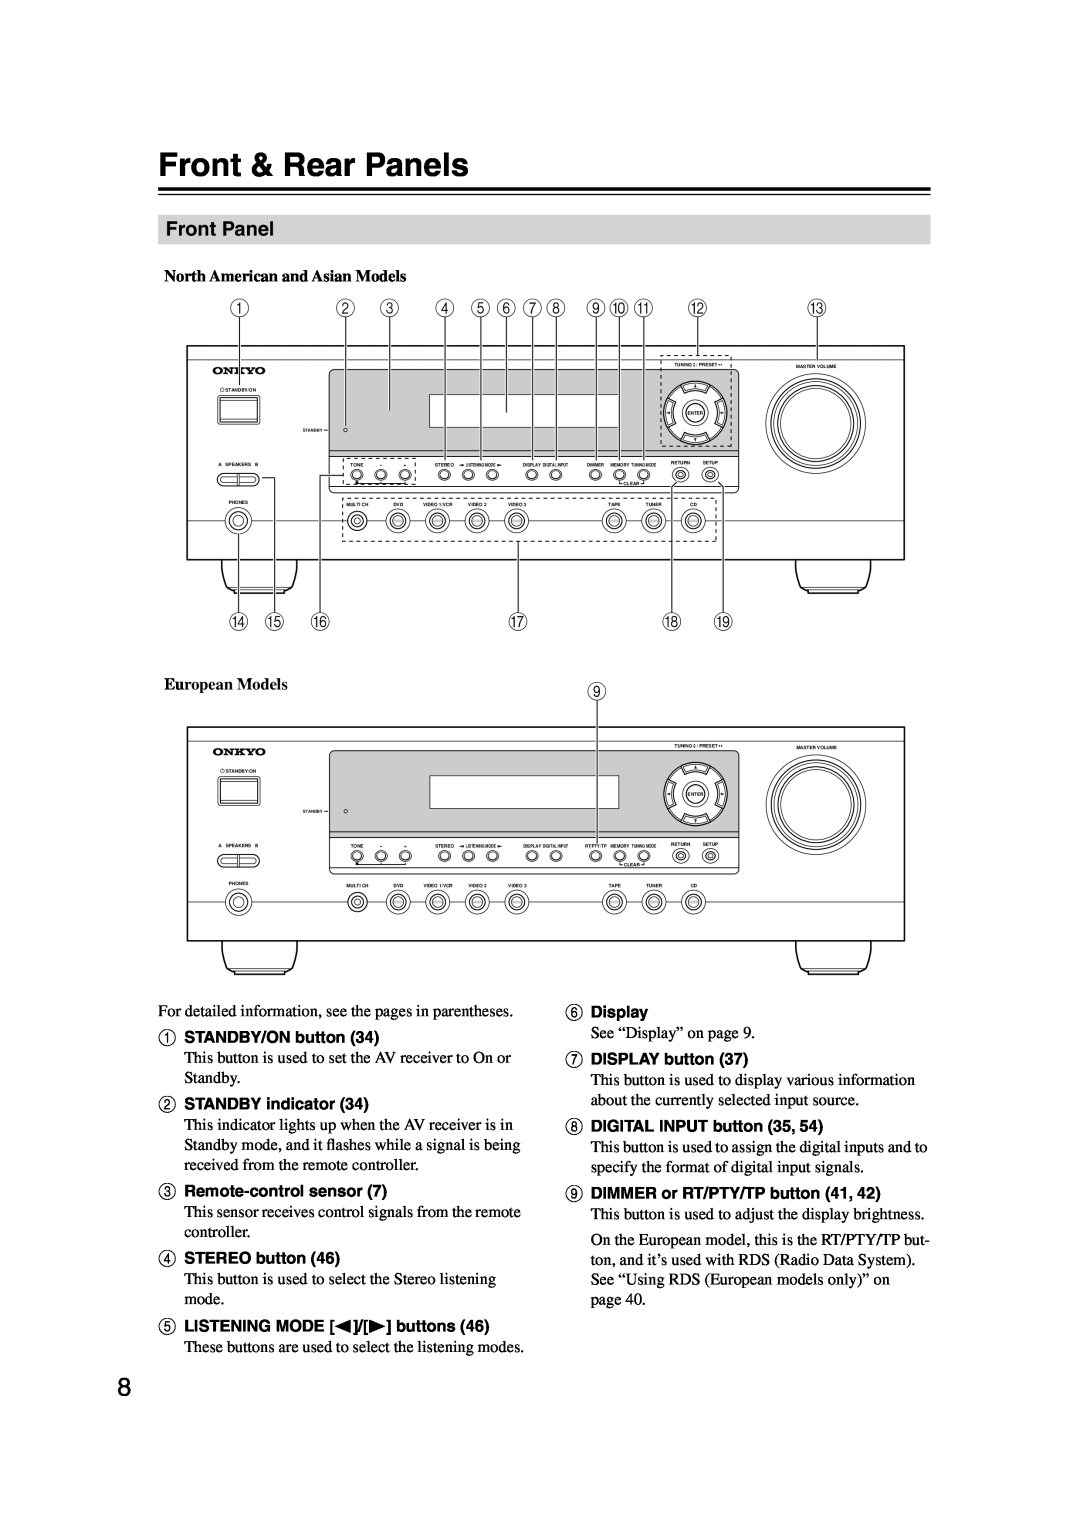 Onkyo HT-S590 instruction manual Front & Rear Panels, Front Panel, 4 5 6 78 9JK, N O P 